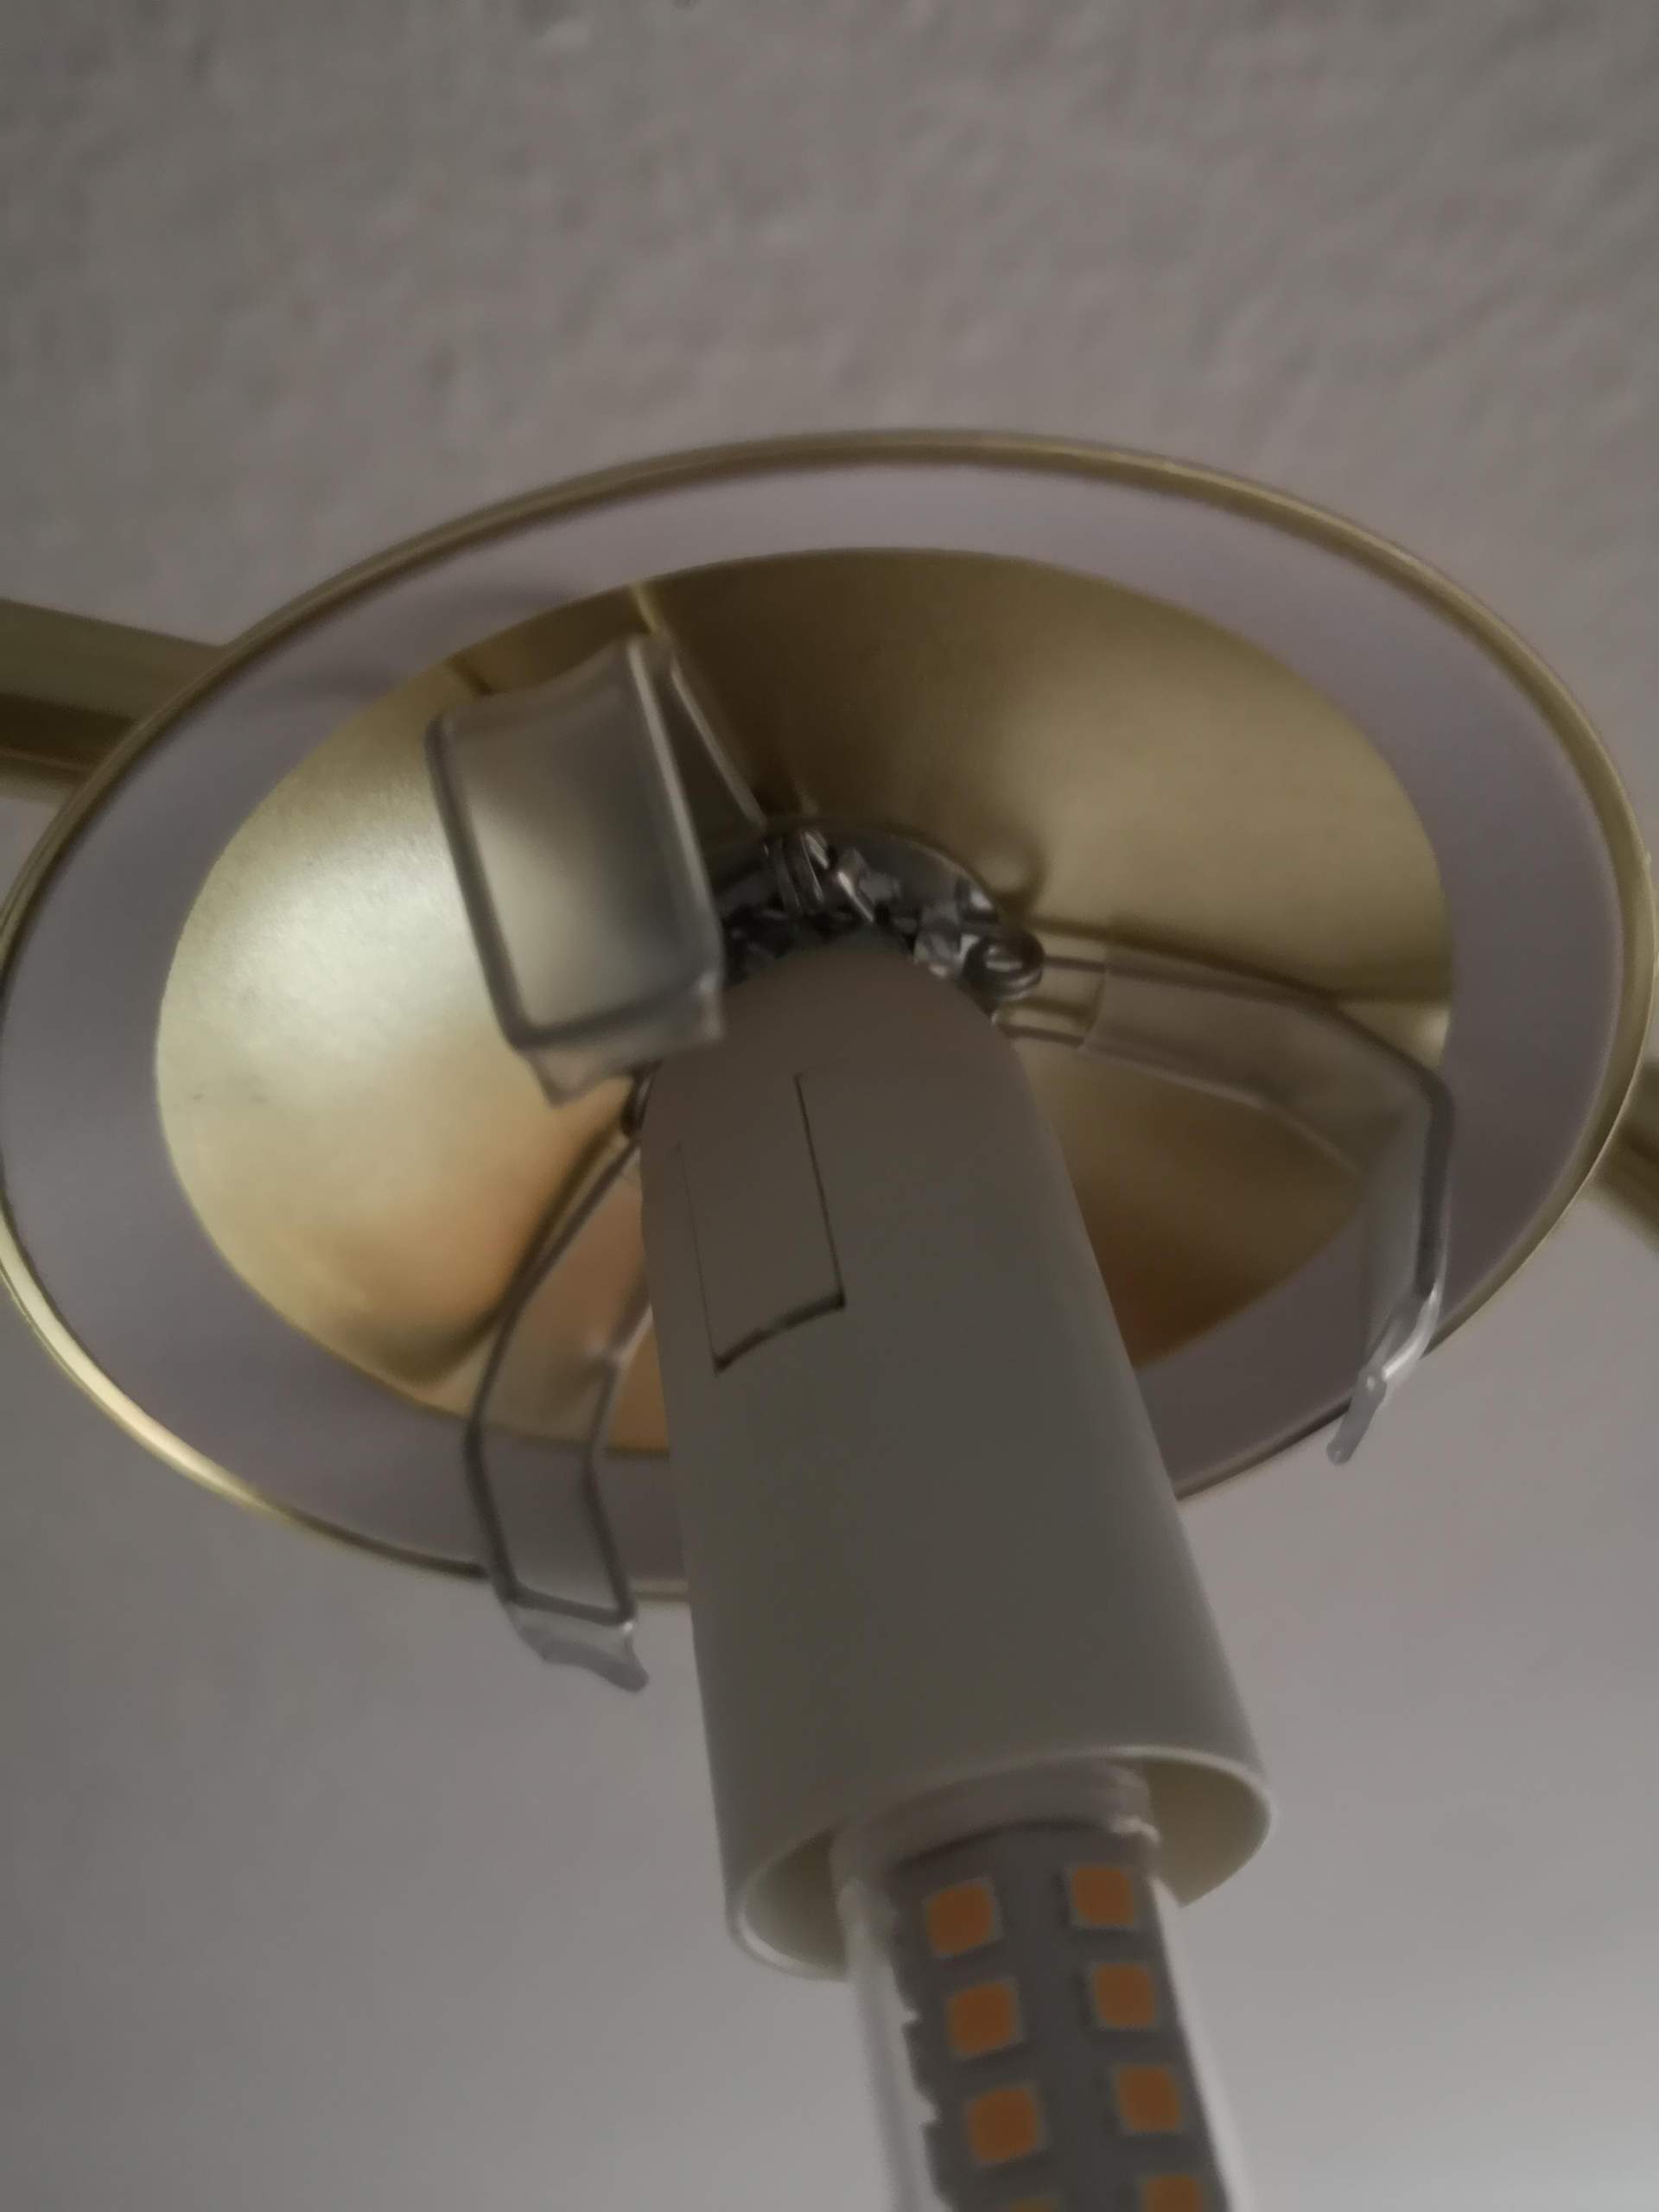 Nordlux Grant Deckenlampe Montage (Technik, Elektrik) Strom, Hilfe